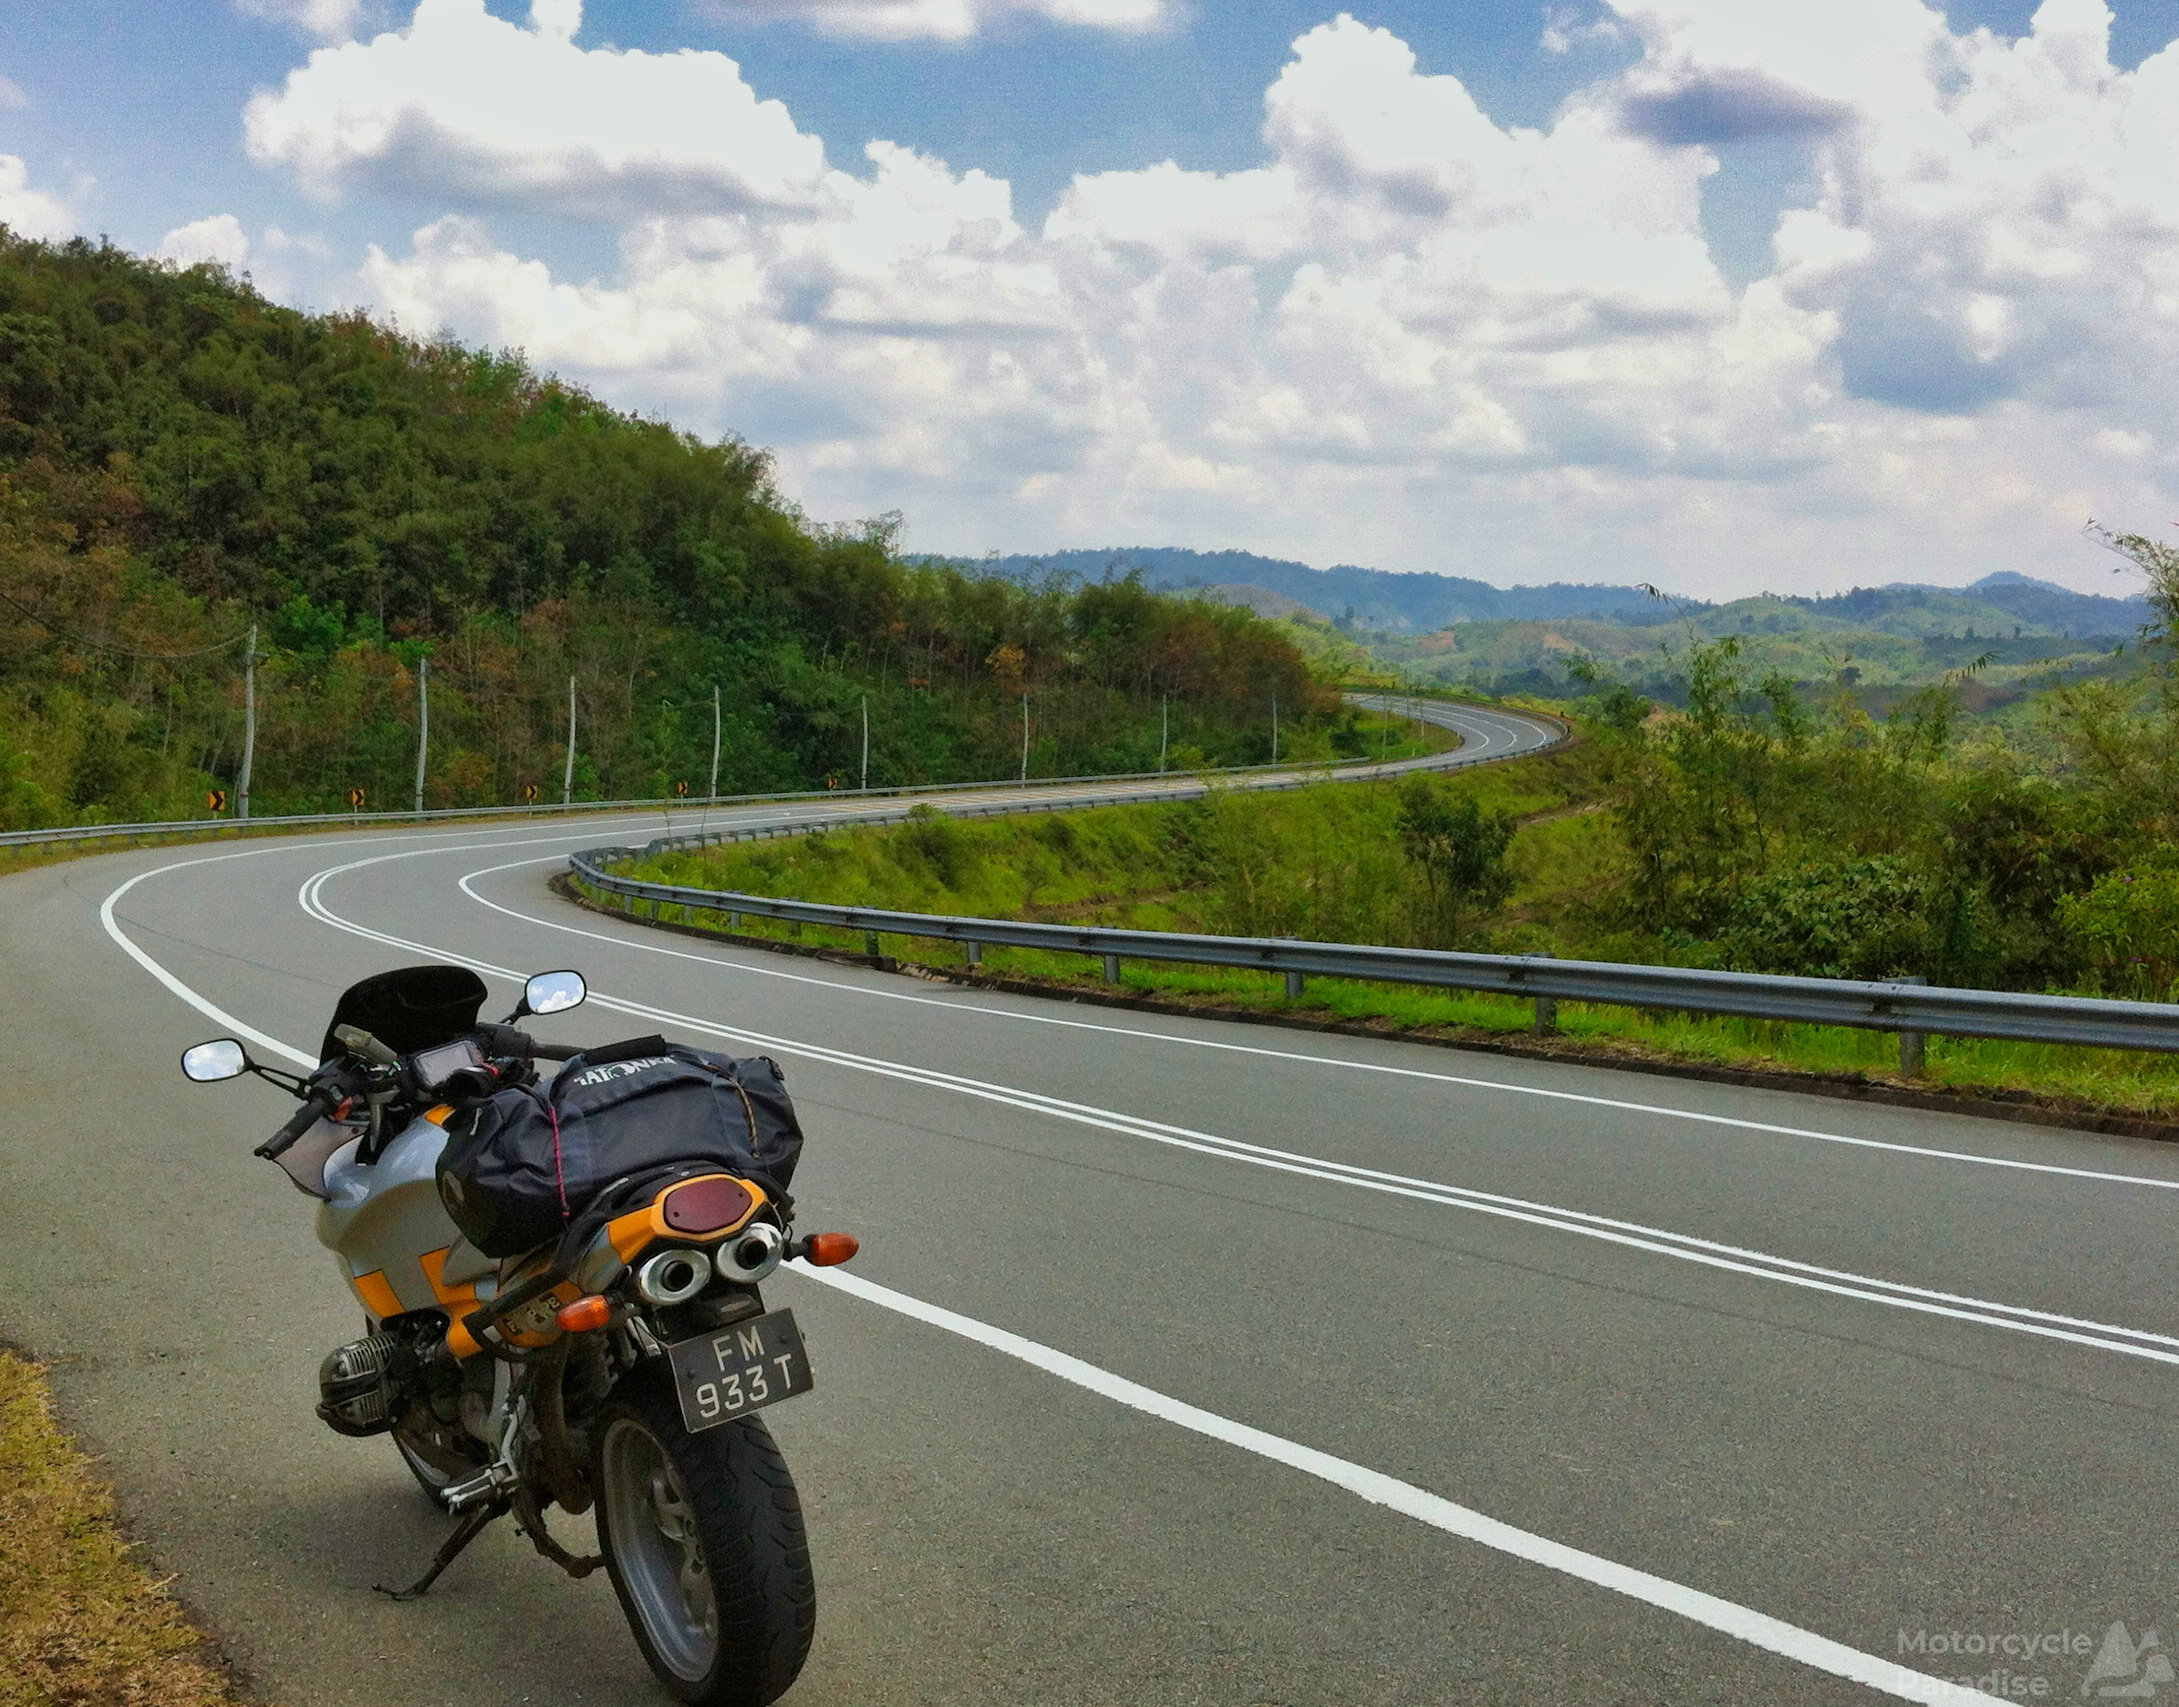 Singapore to Malaysia motorcycle ride | Motorcycle Paradise